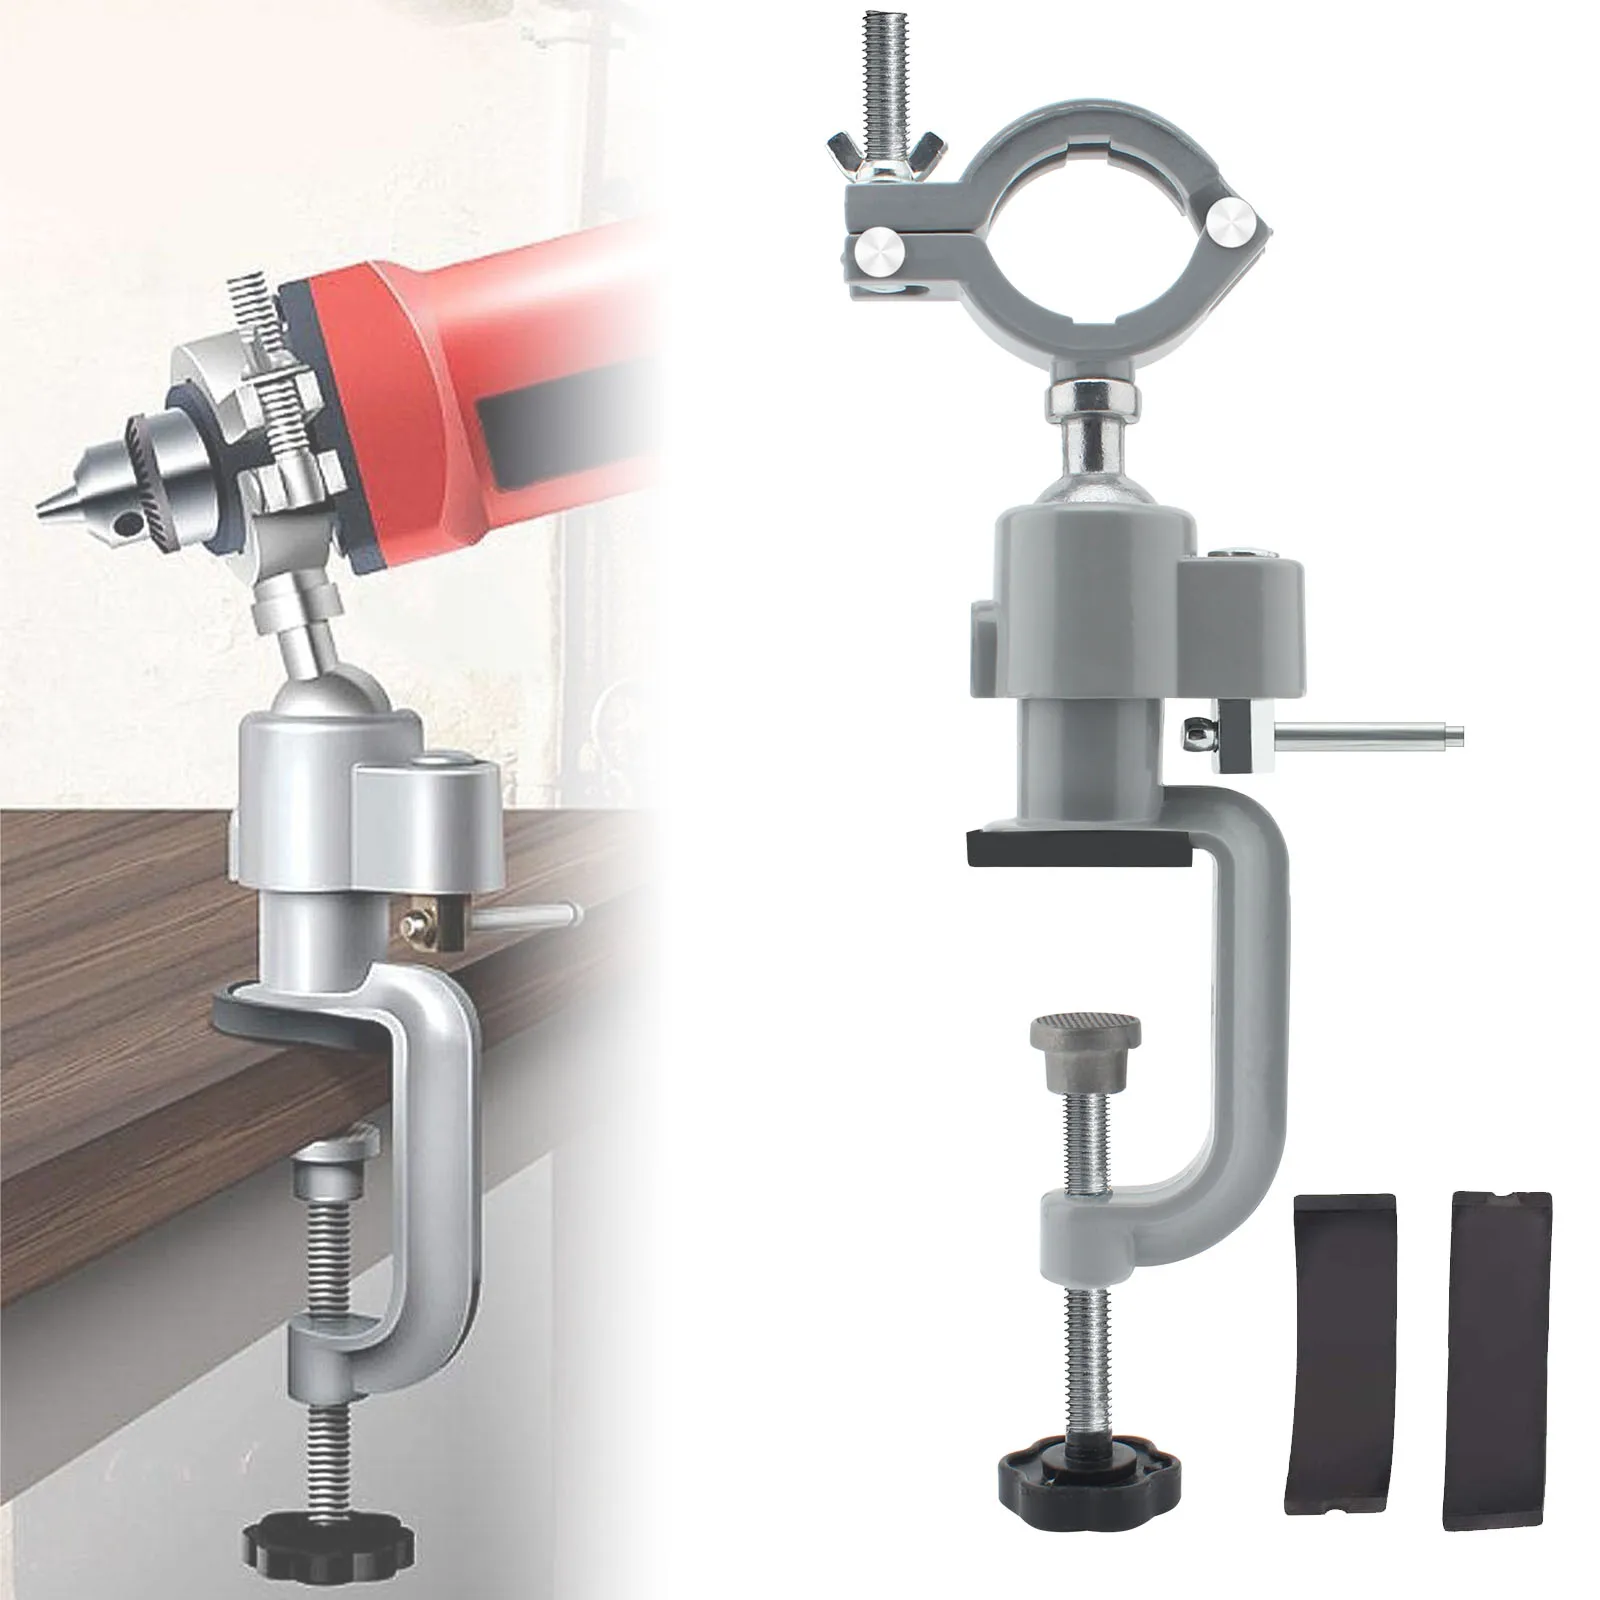 

Electric Drill Bracket, Universal Electric Drill Stand Grinder Holder Bench Vises Clamp Grinder Holder for DIY Work, Aluminum